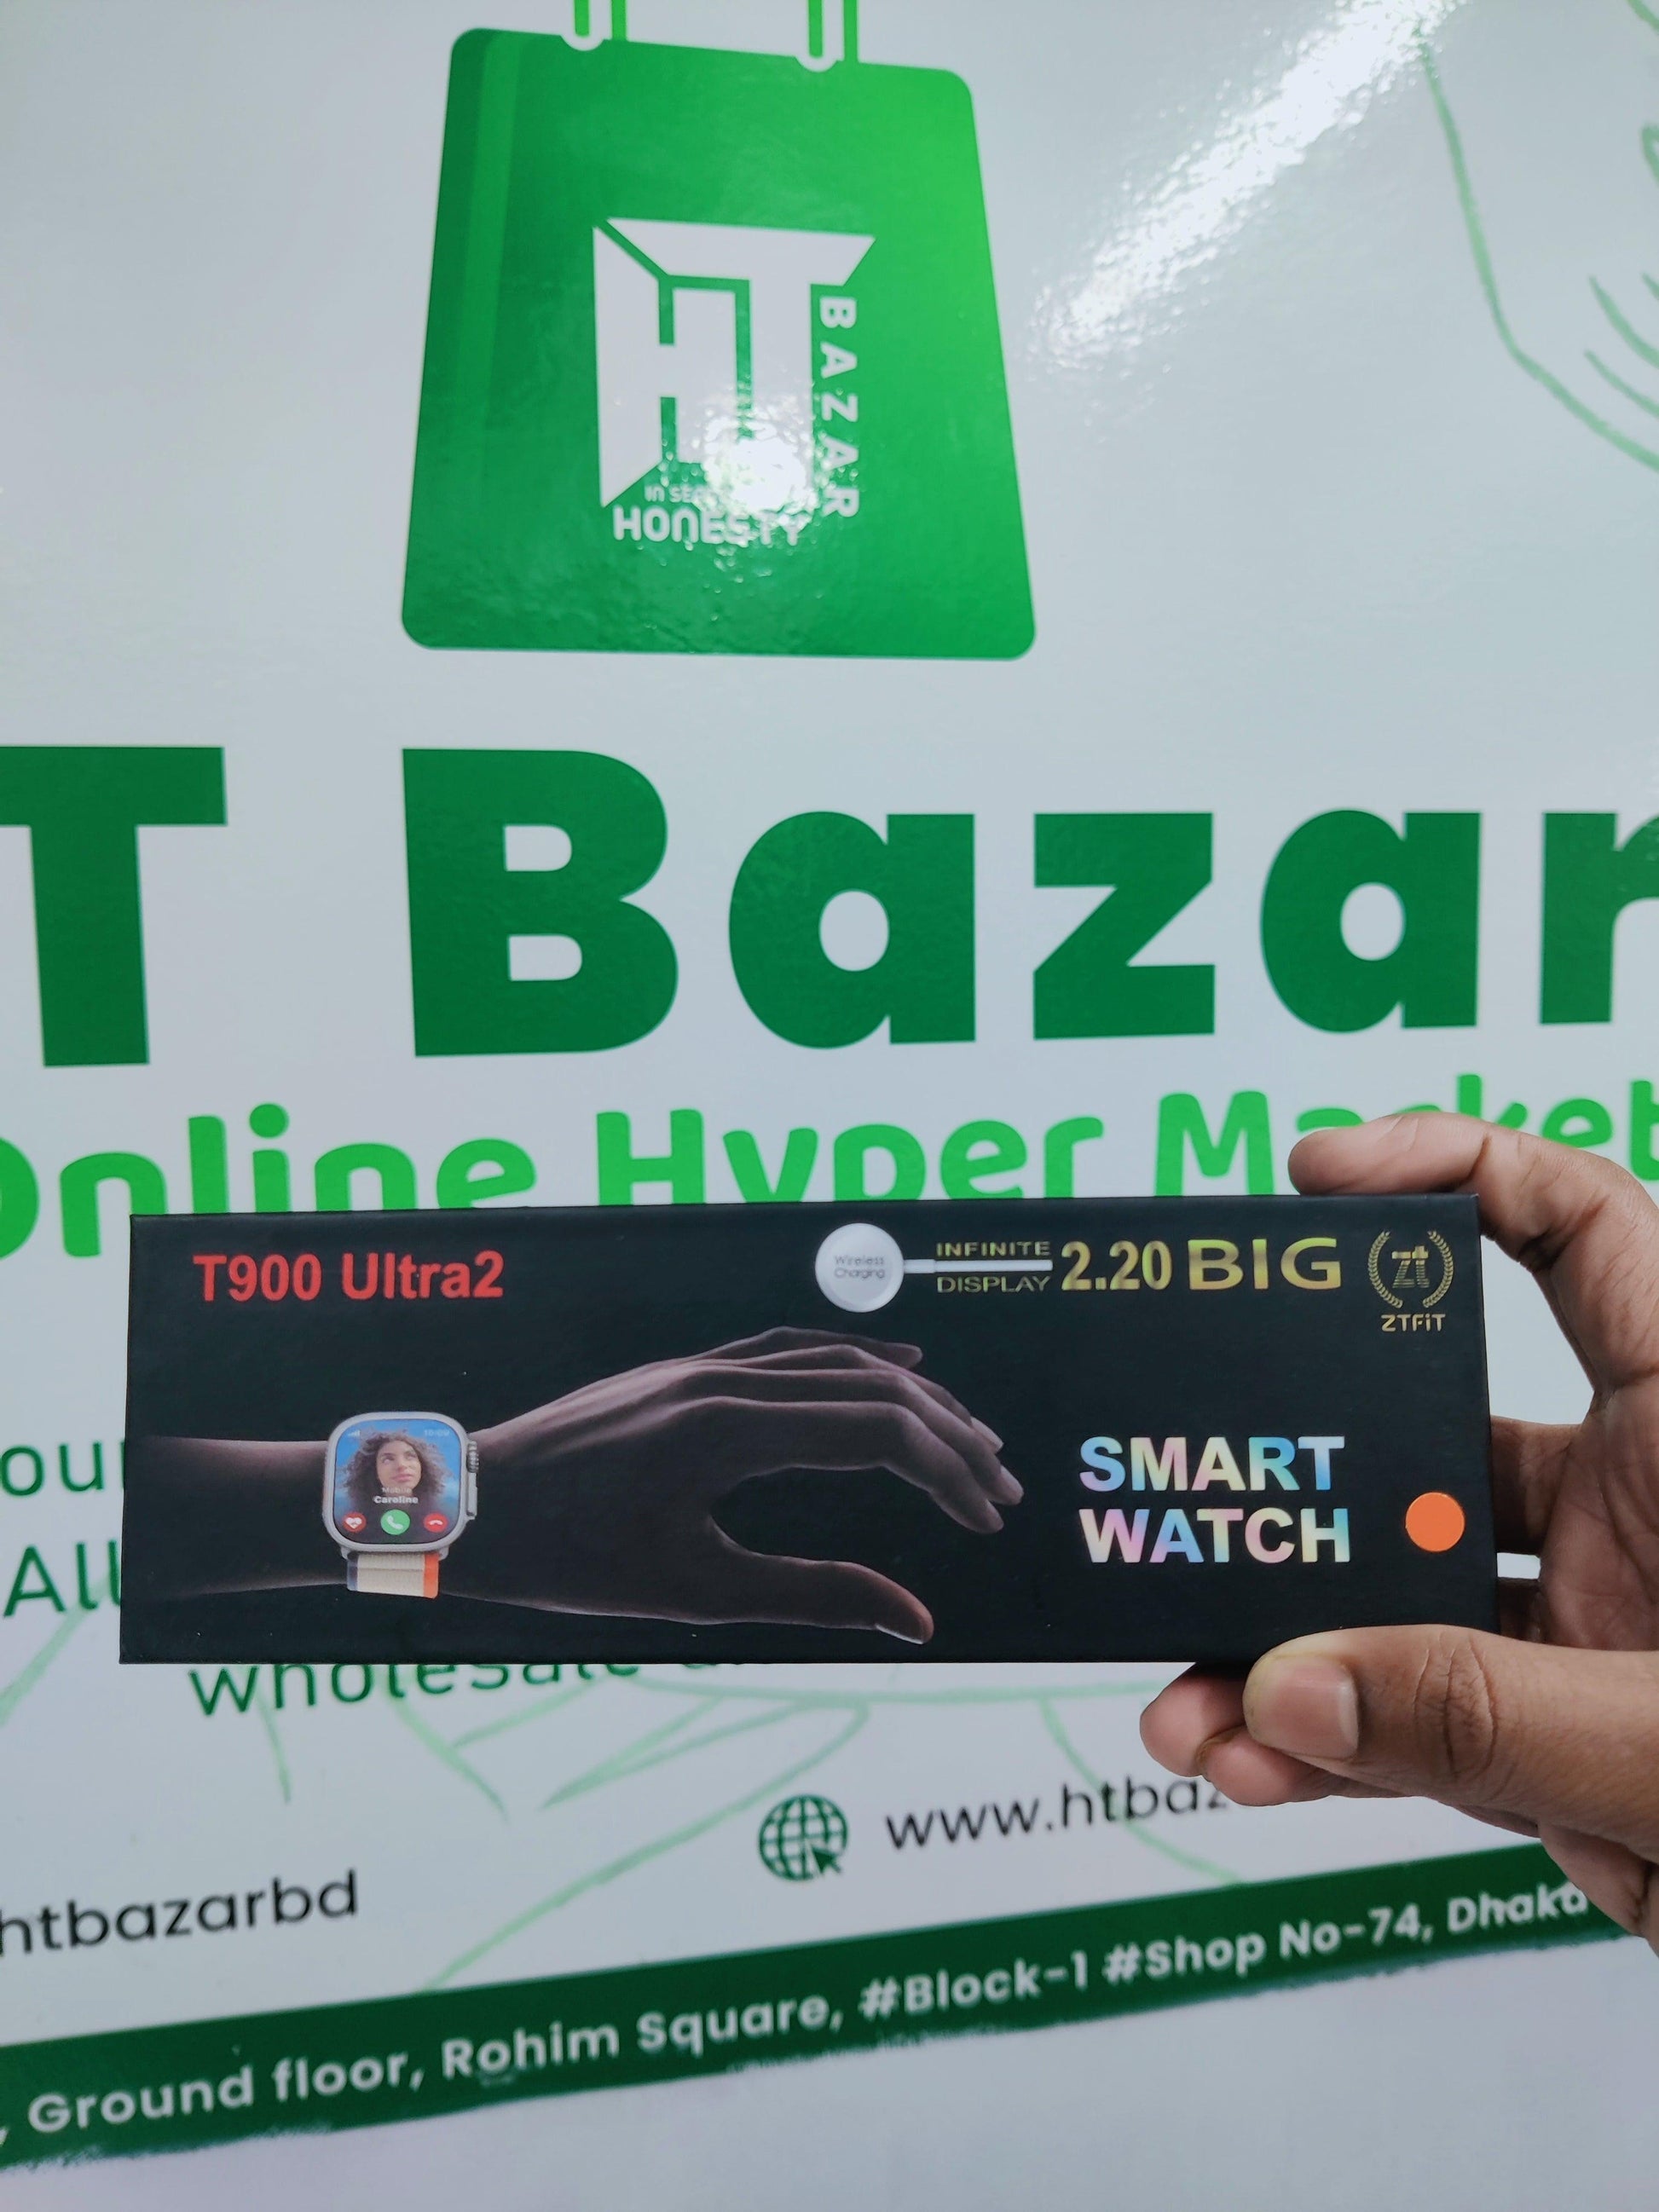 T900 Ultra 2 smartwatch - HT Bazar